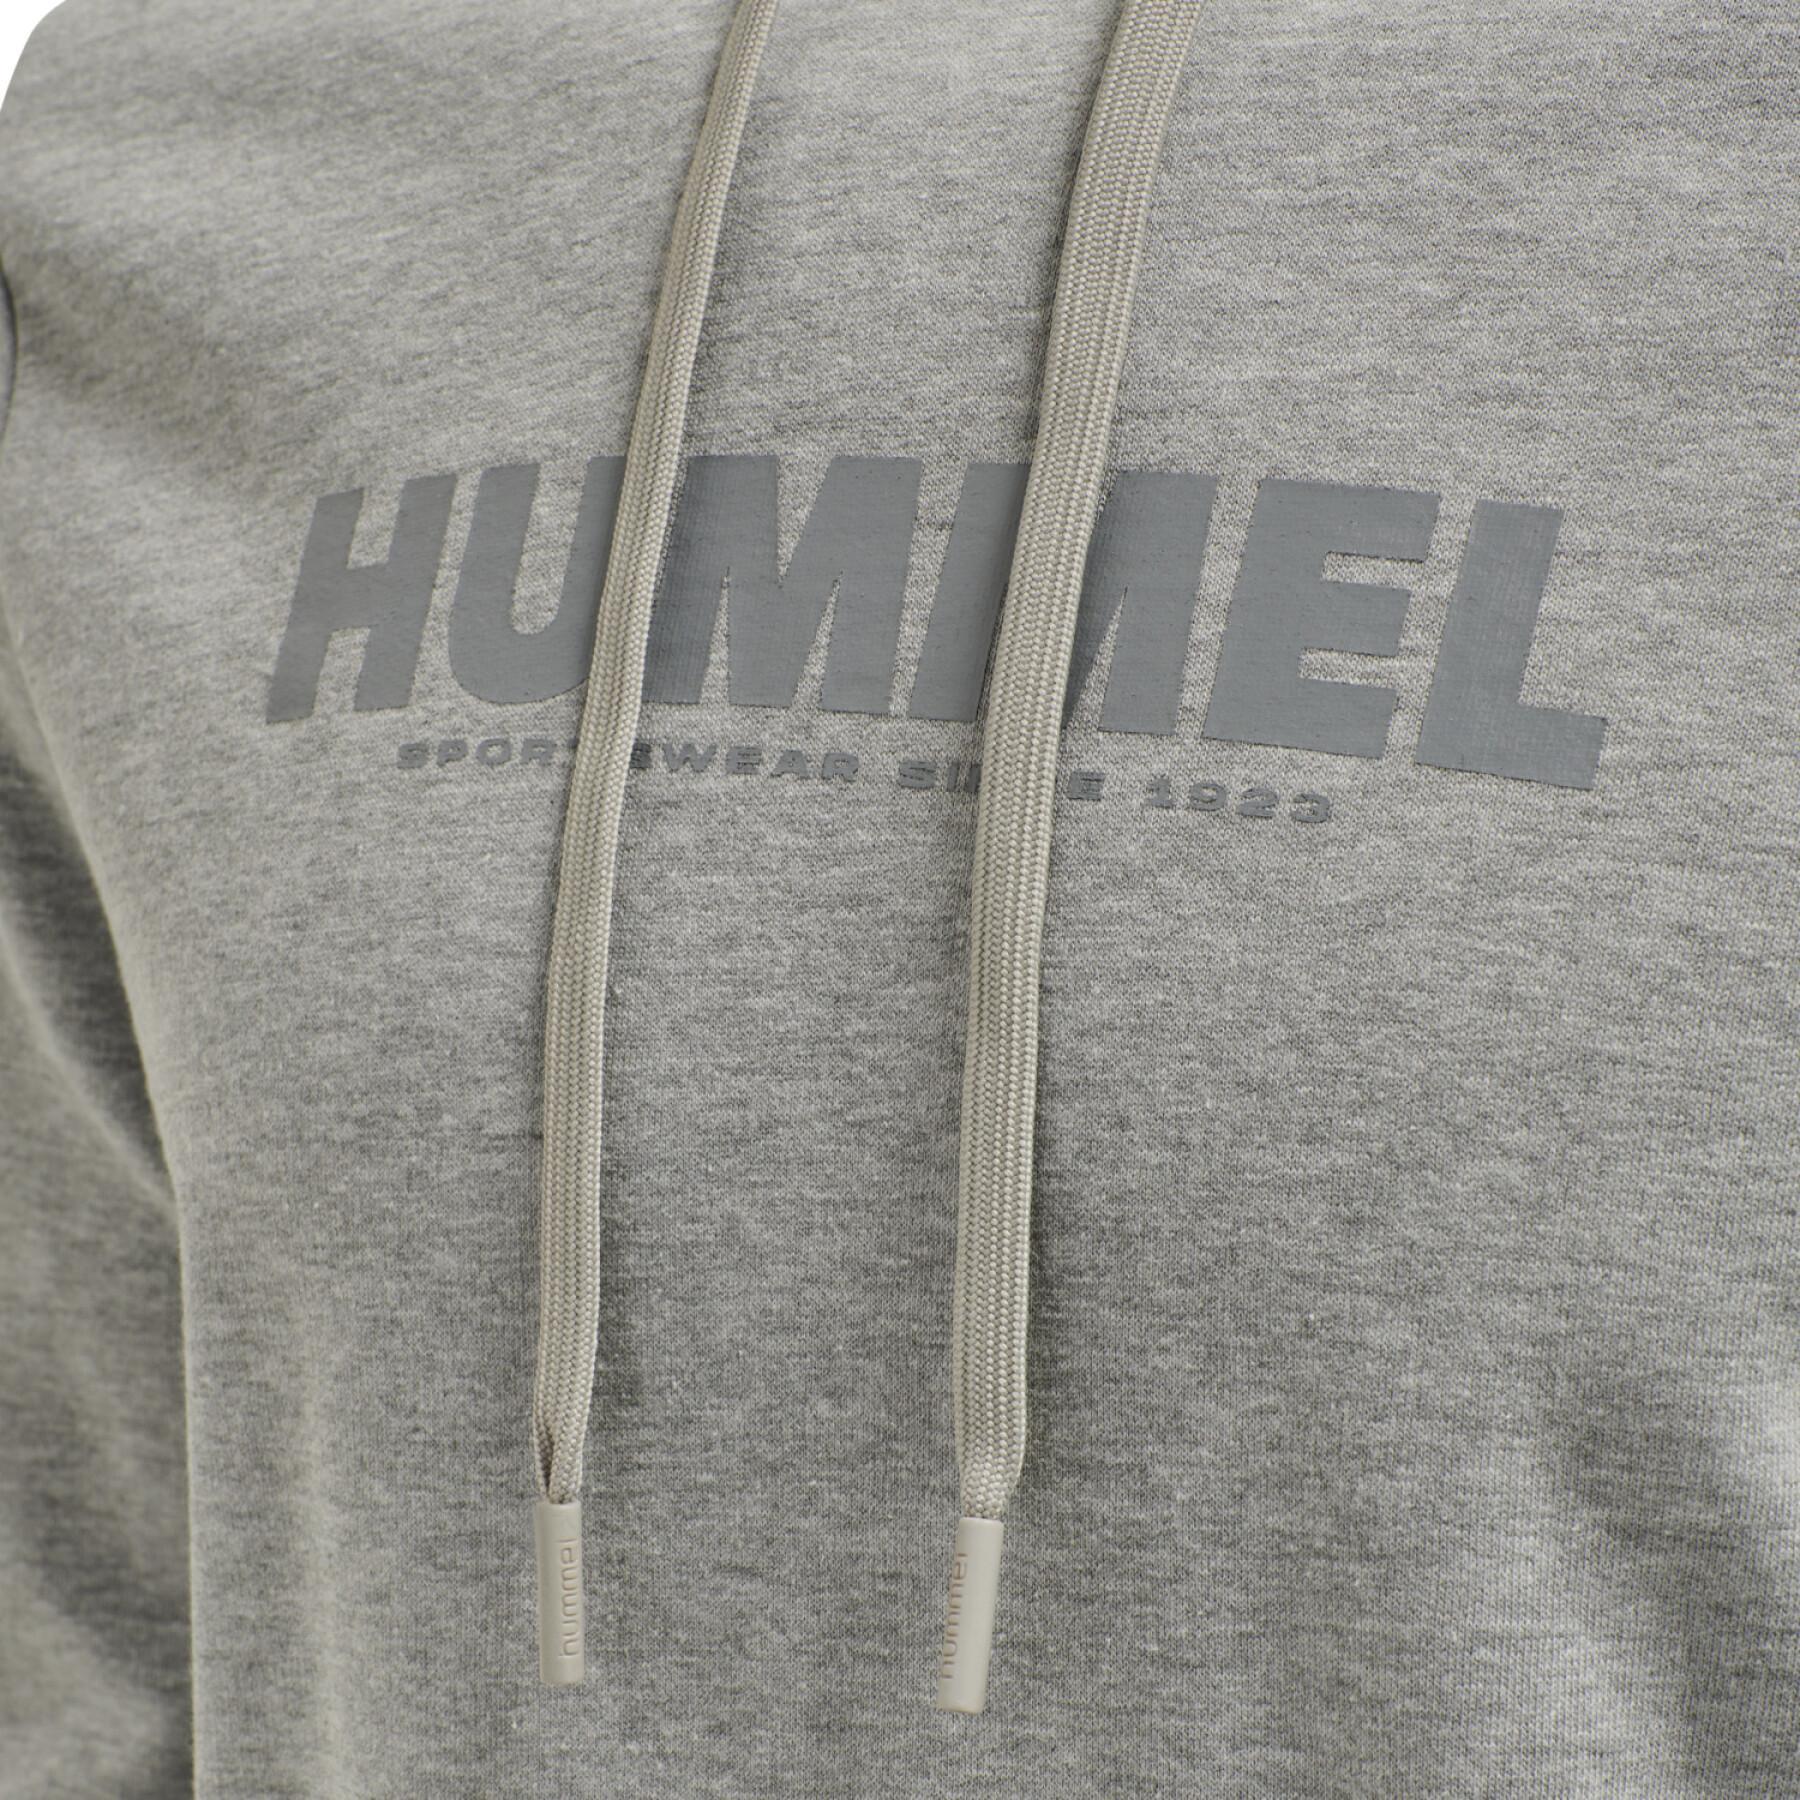 Camisola com capuz Hummel Legacy Logo Plus